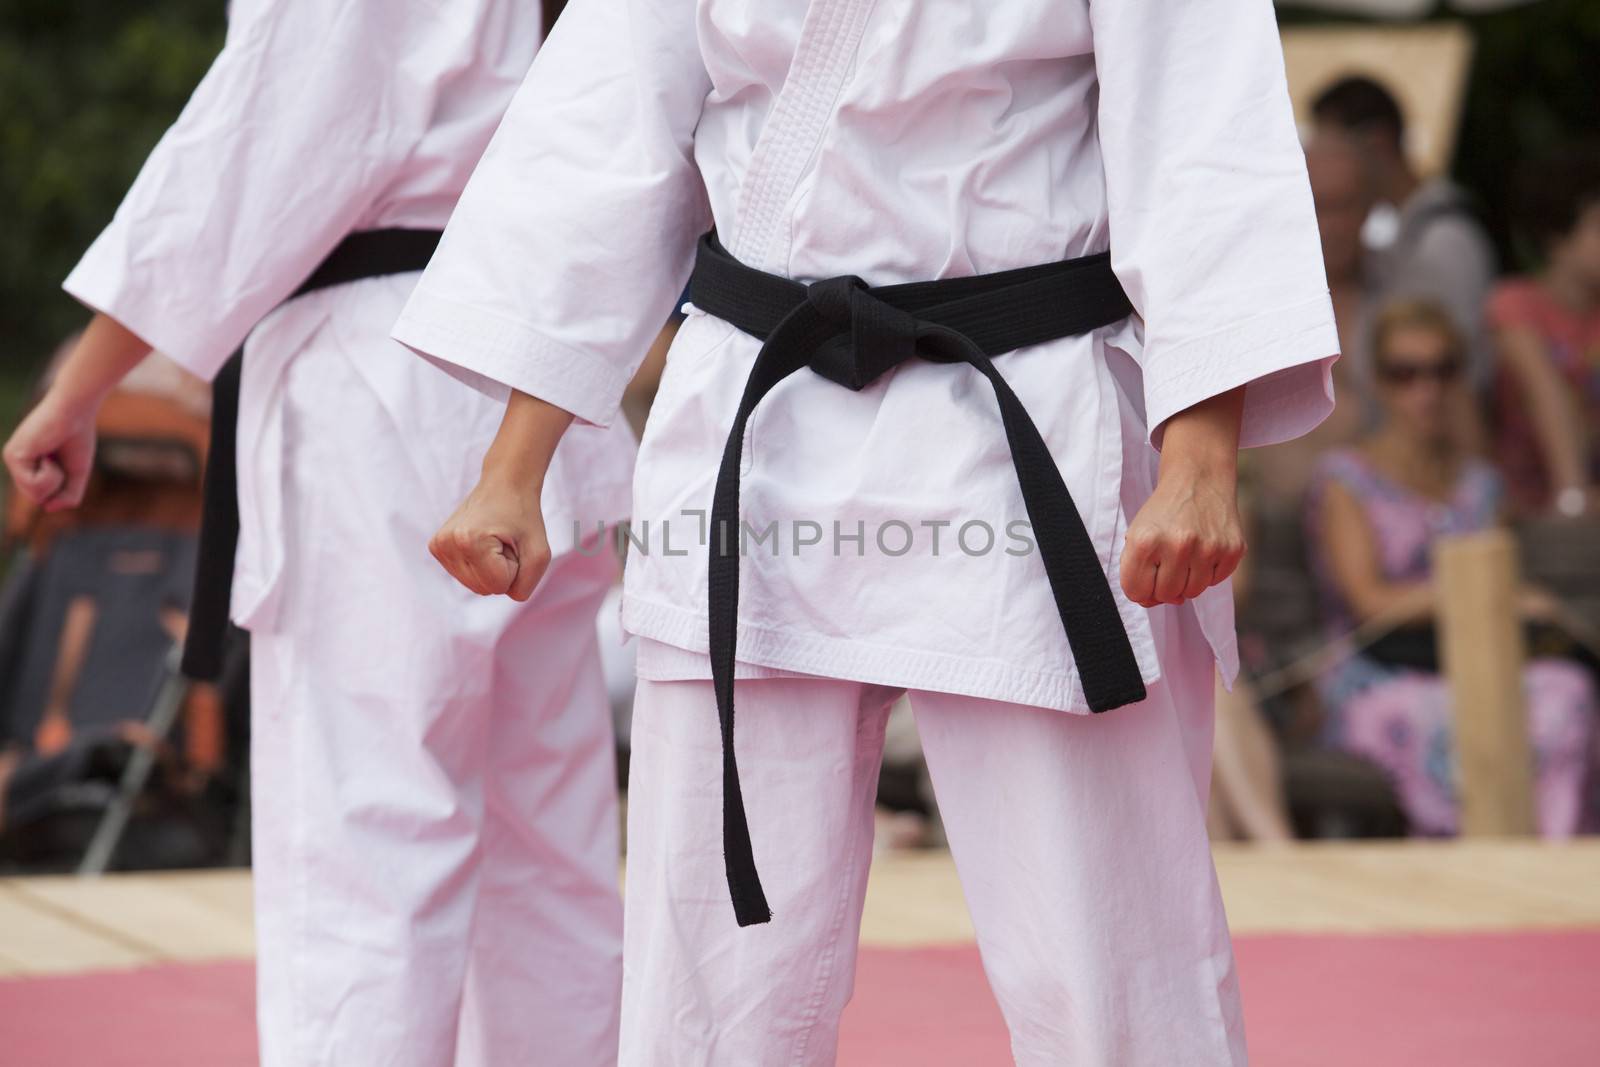 Karate position